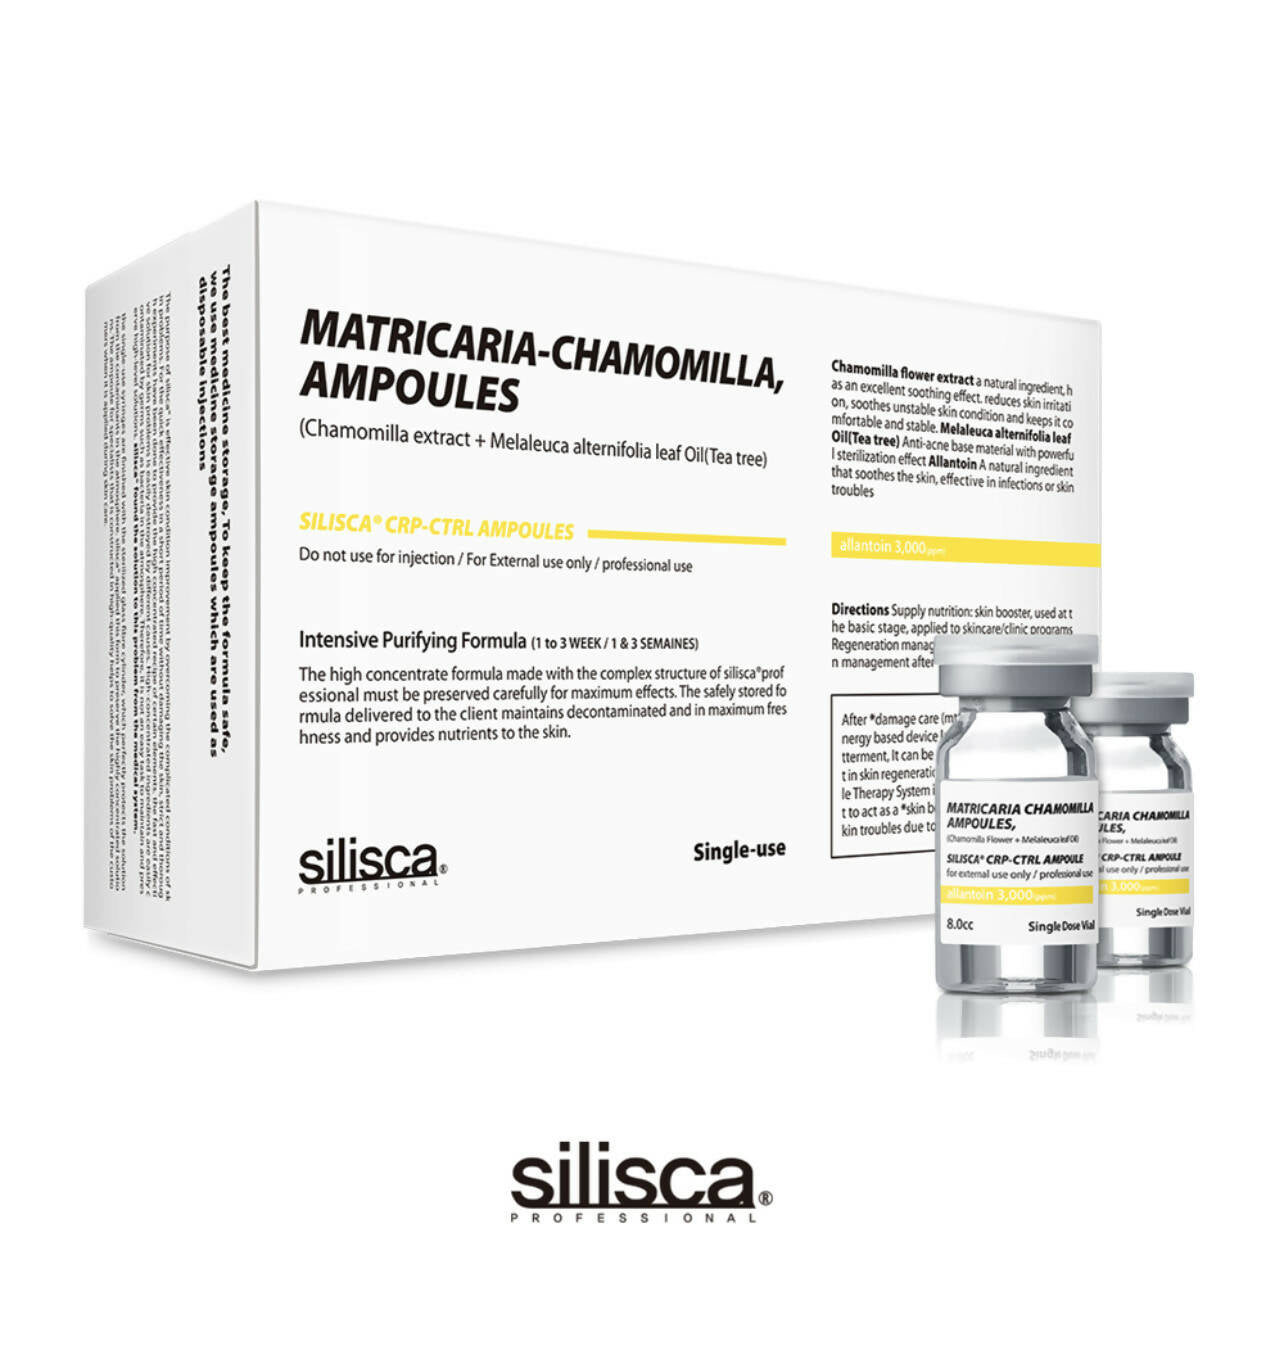 Silisca Matricaria-Chamomilla Acne Ampoules, 8cc x 15ea, Professional Use